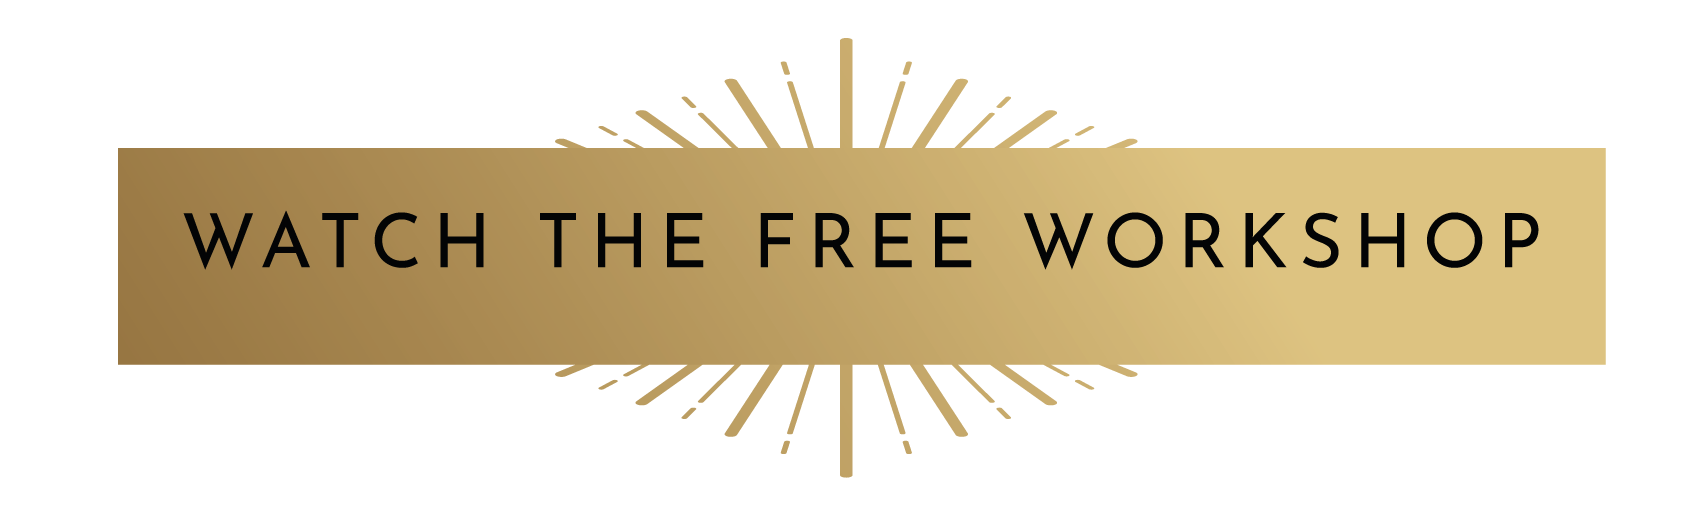 Watch the free workshop